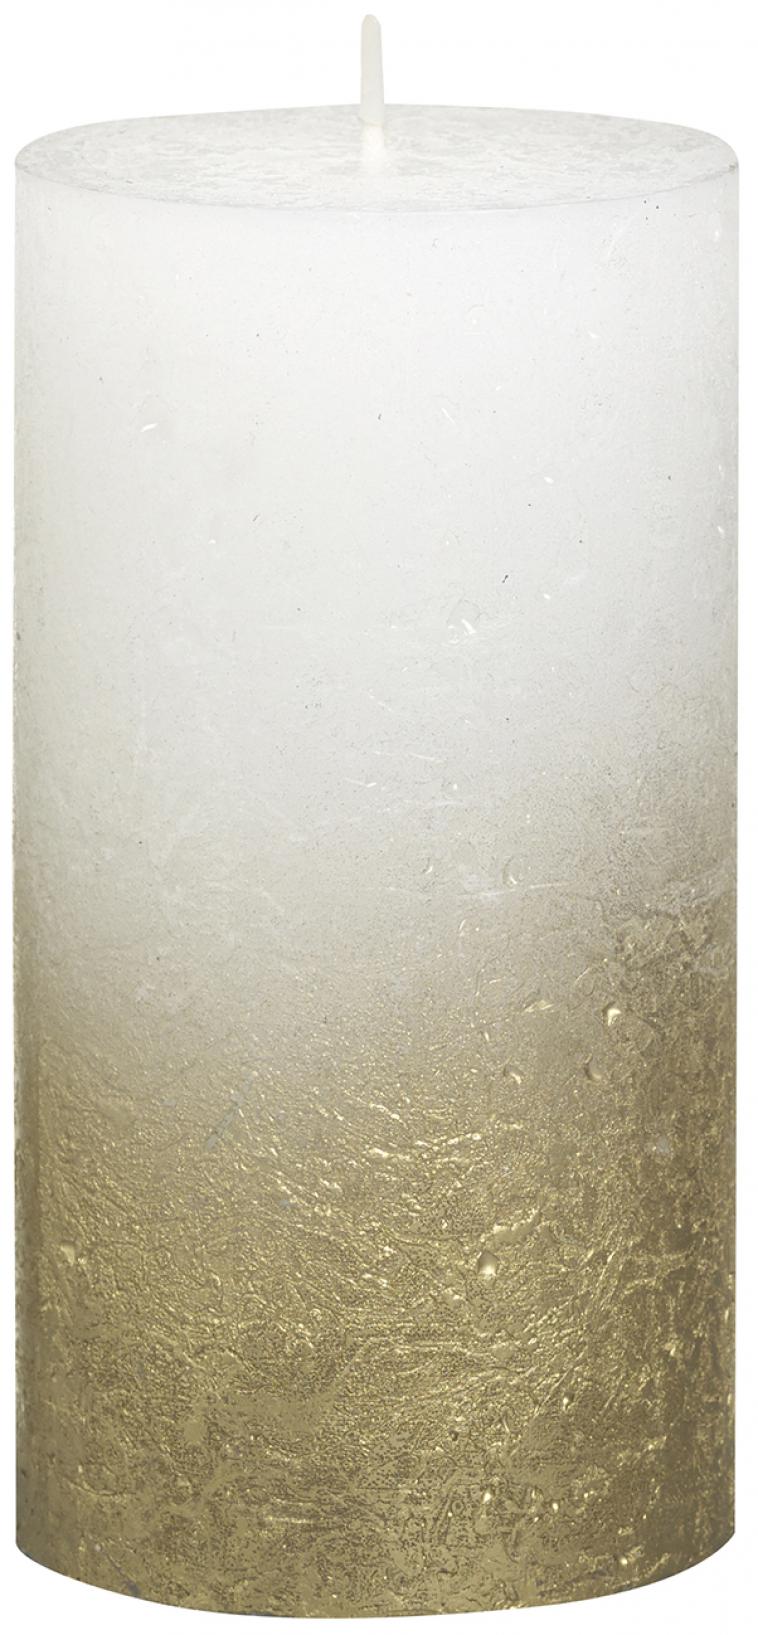 Bougie cylindre rustique Fading métallique or 130/68 - photo 4